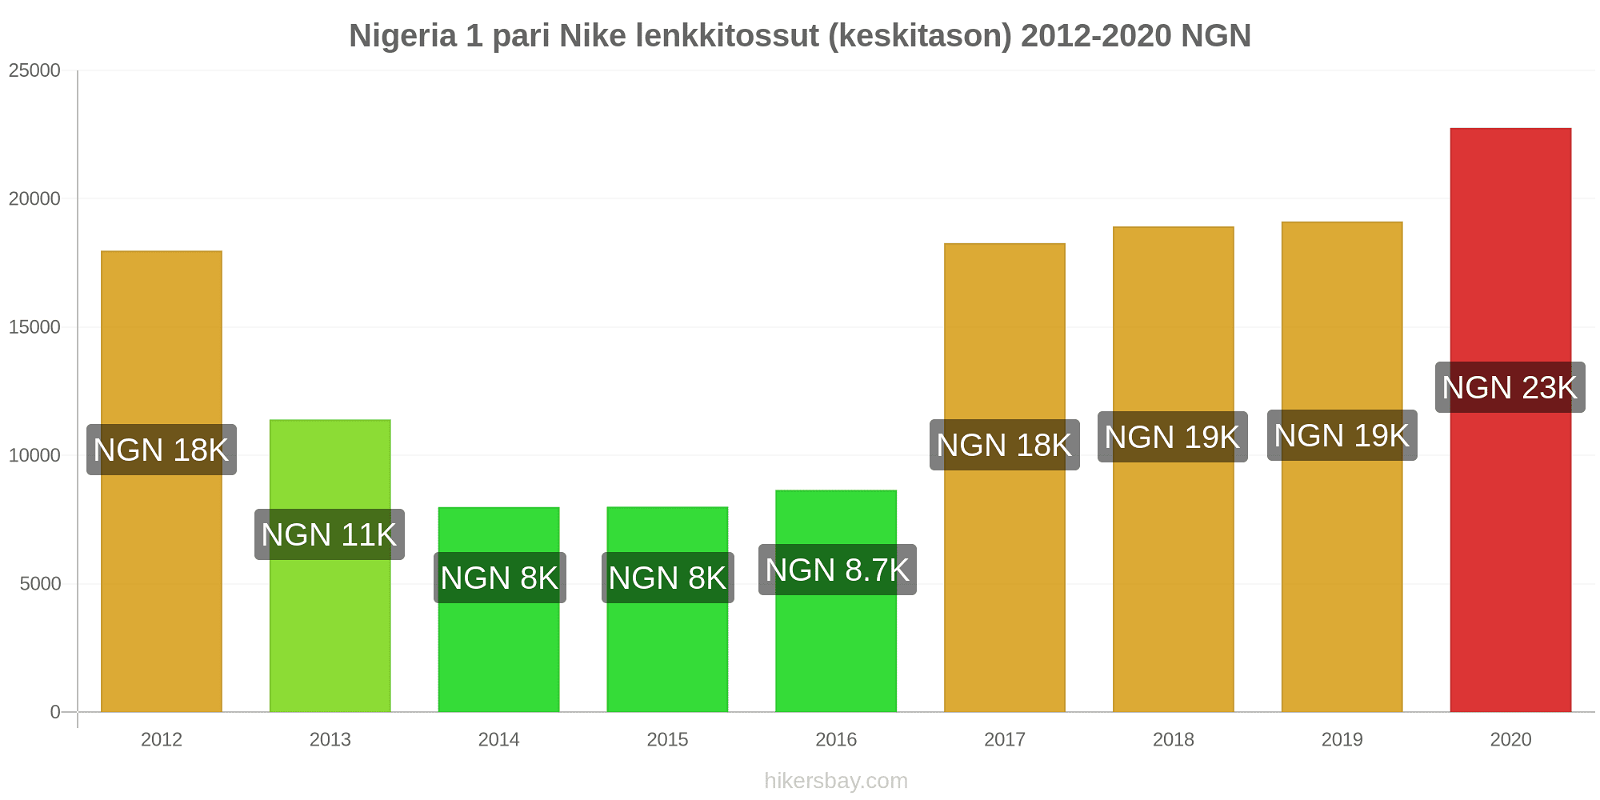 Nigeria hintojen muutokset 1 pari Nike lenkkitossut (keskitason) hikersbay.com